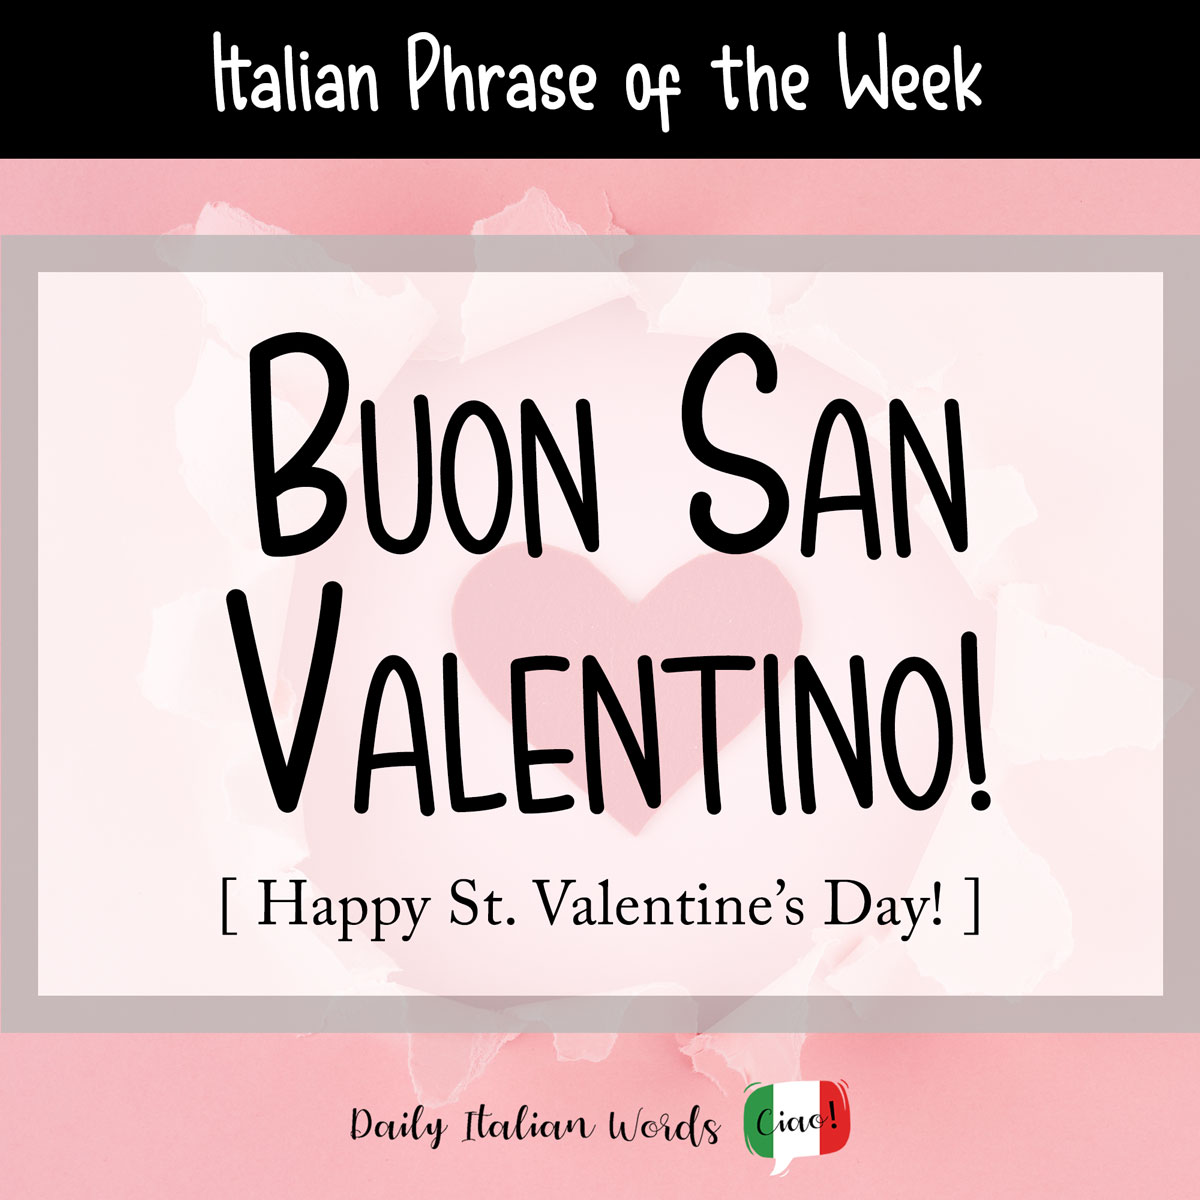 How to Say Happy Valentine's Day in Italian - Daily Italian Words